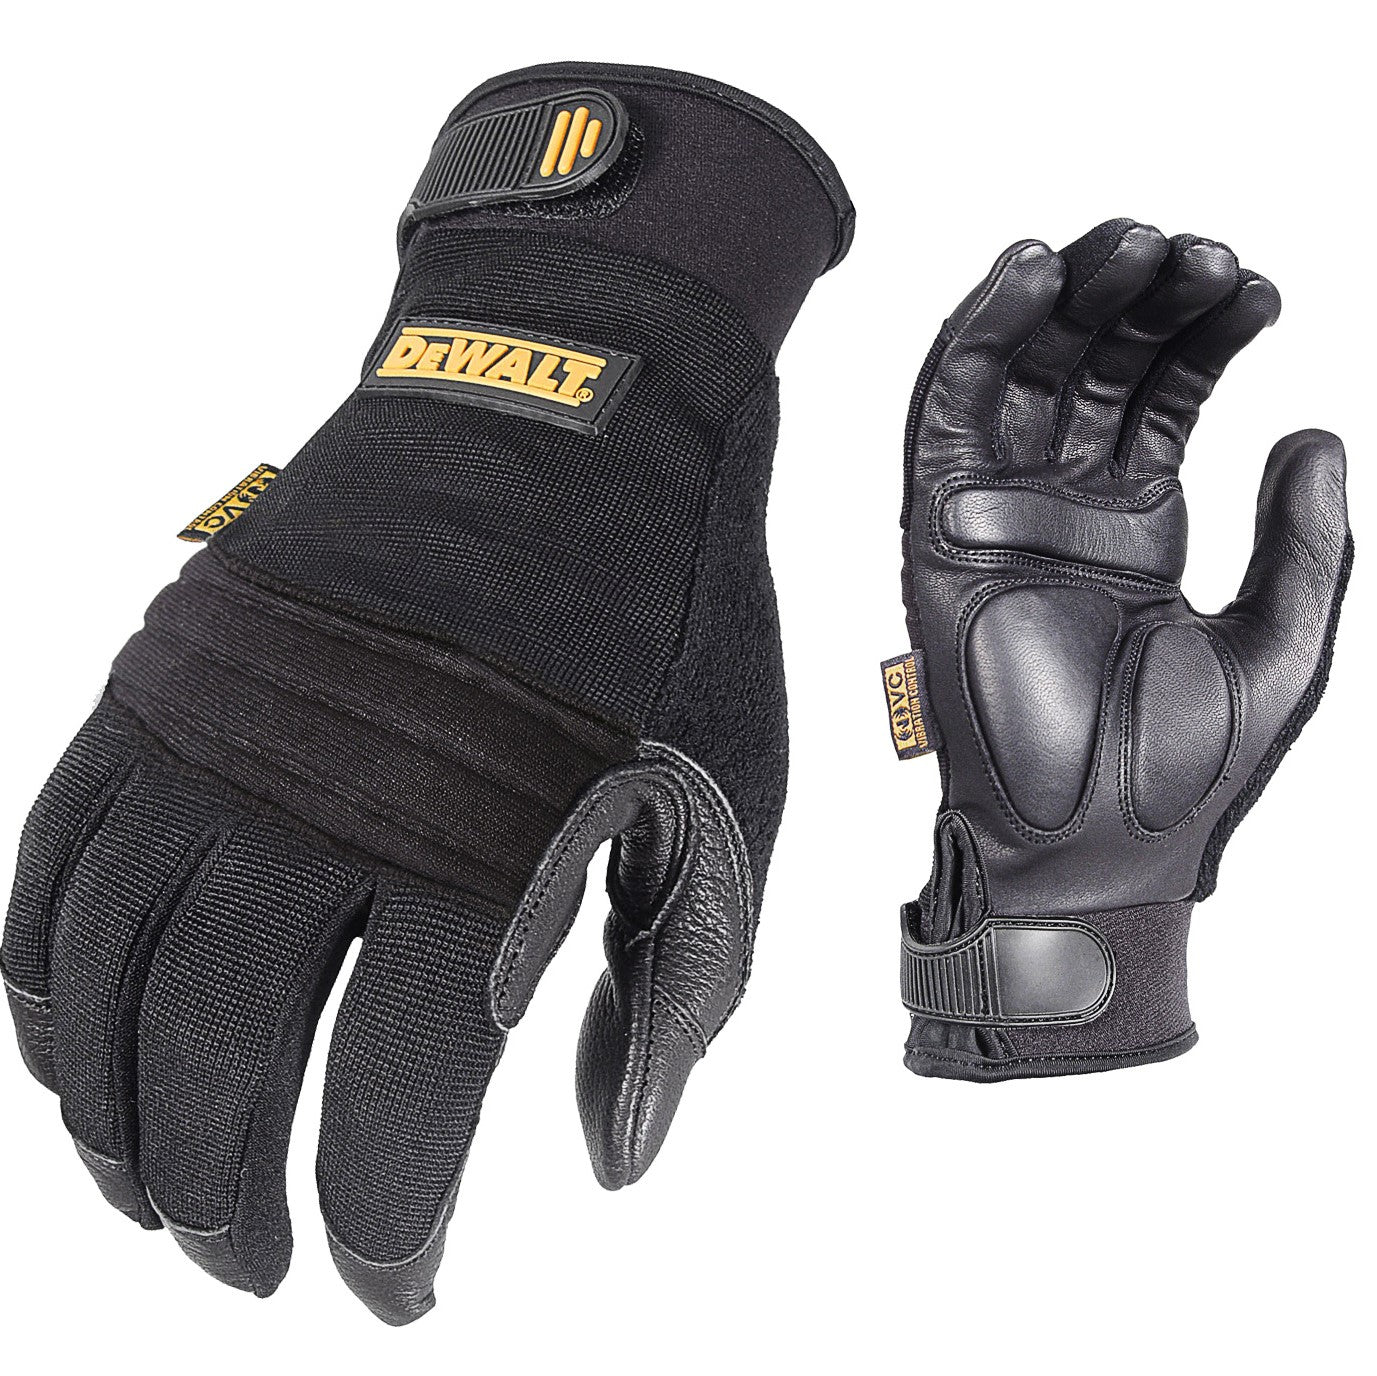 DEWALT DPG250 Premium Padded Vibration Reducing Glove